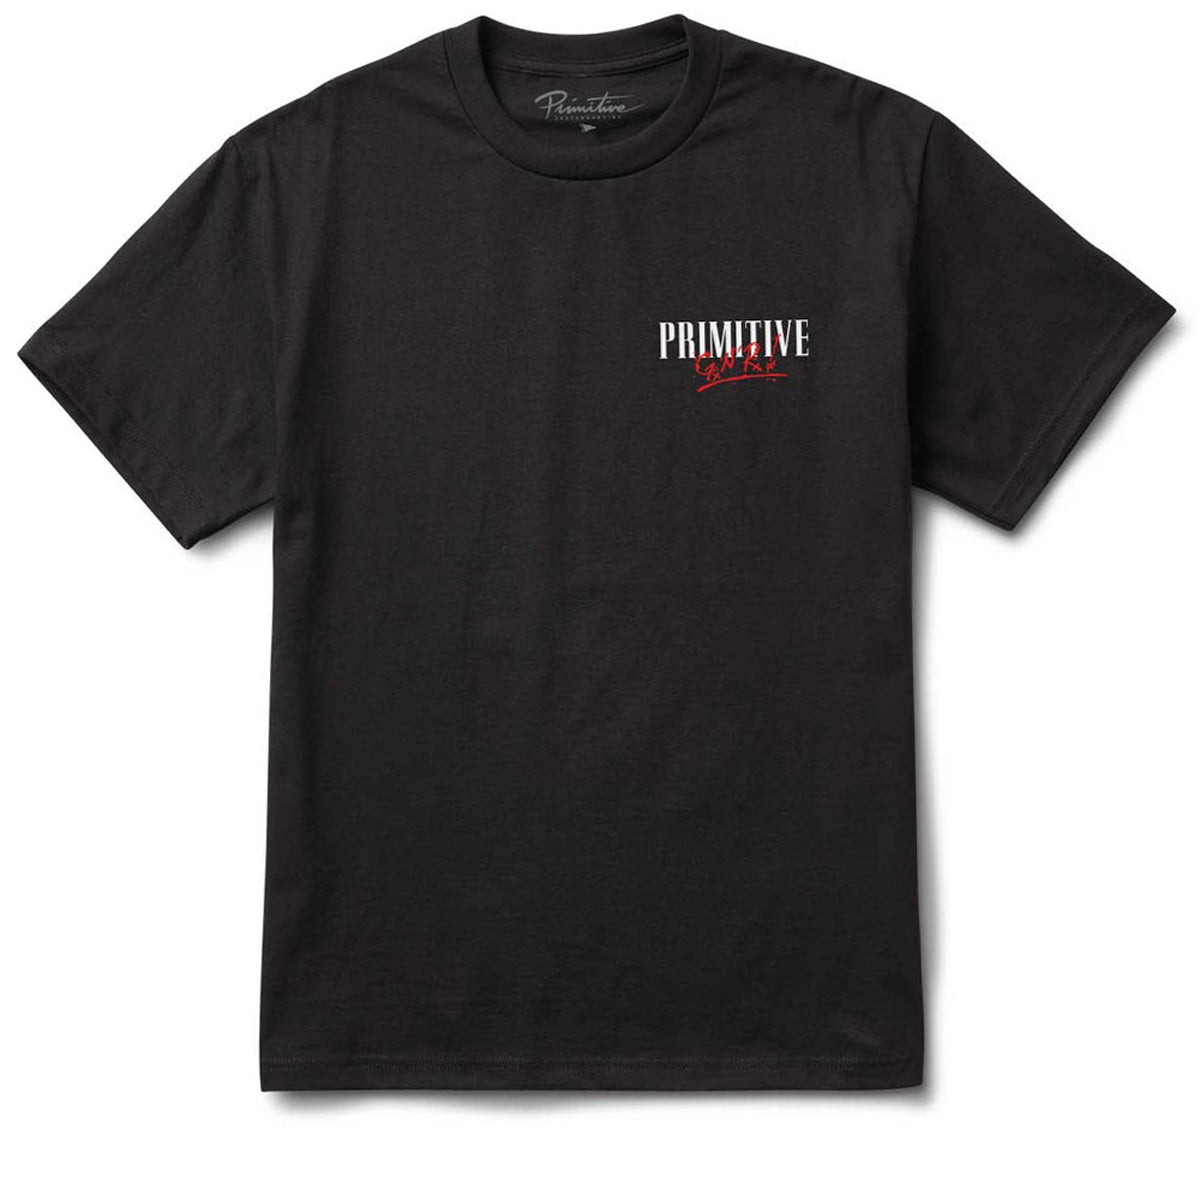 Primitive x Guns N' Roses Illusion Dirty P T-Shirt - Black image 2